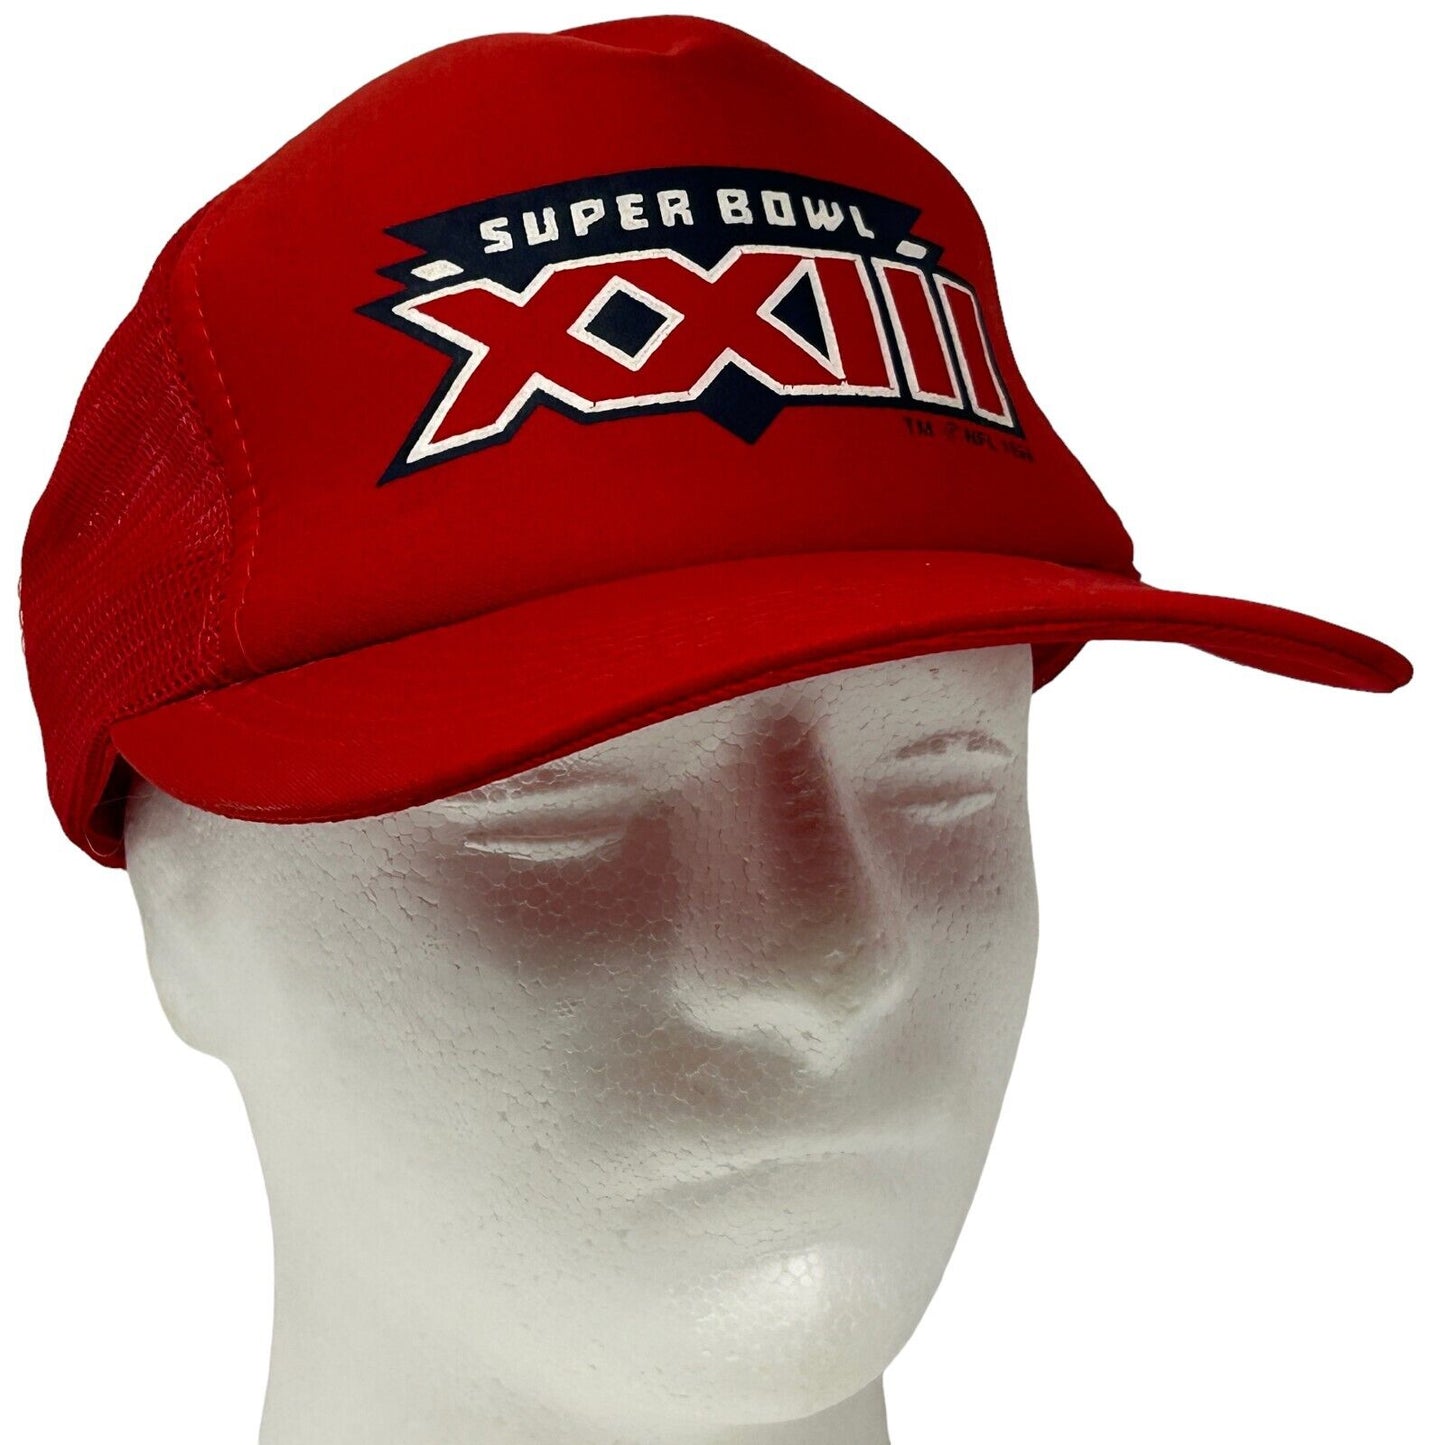 Super Bowl XXIII Trucker Hat Vintage 80s NFL San Francisco 49ers Baseball Cap